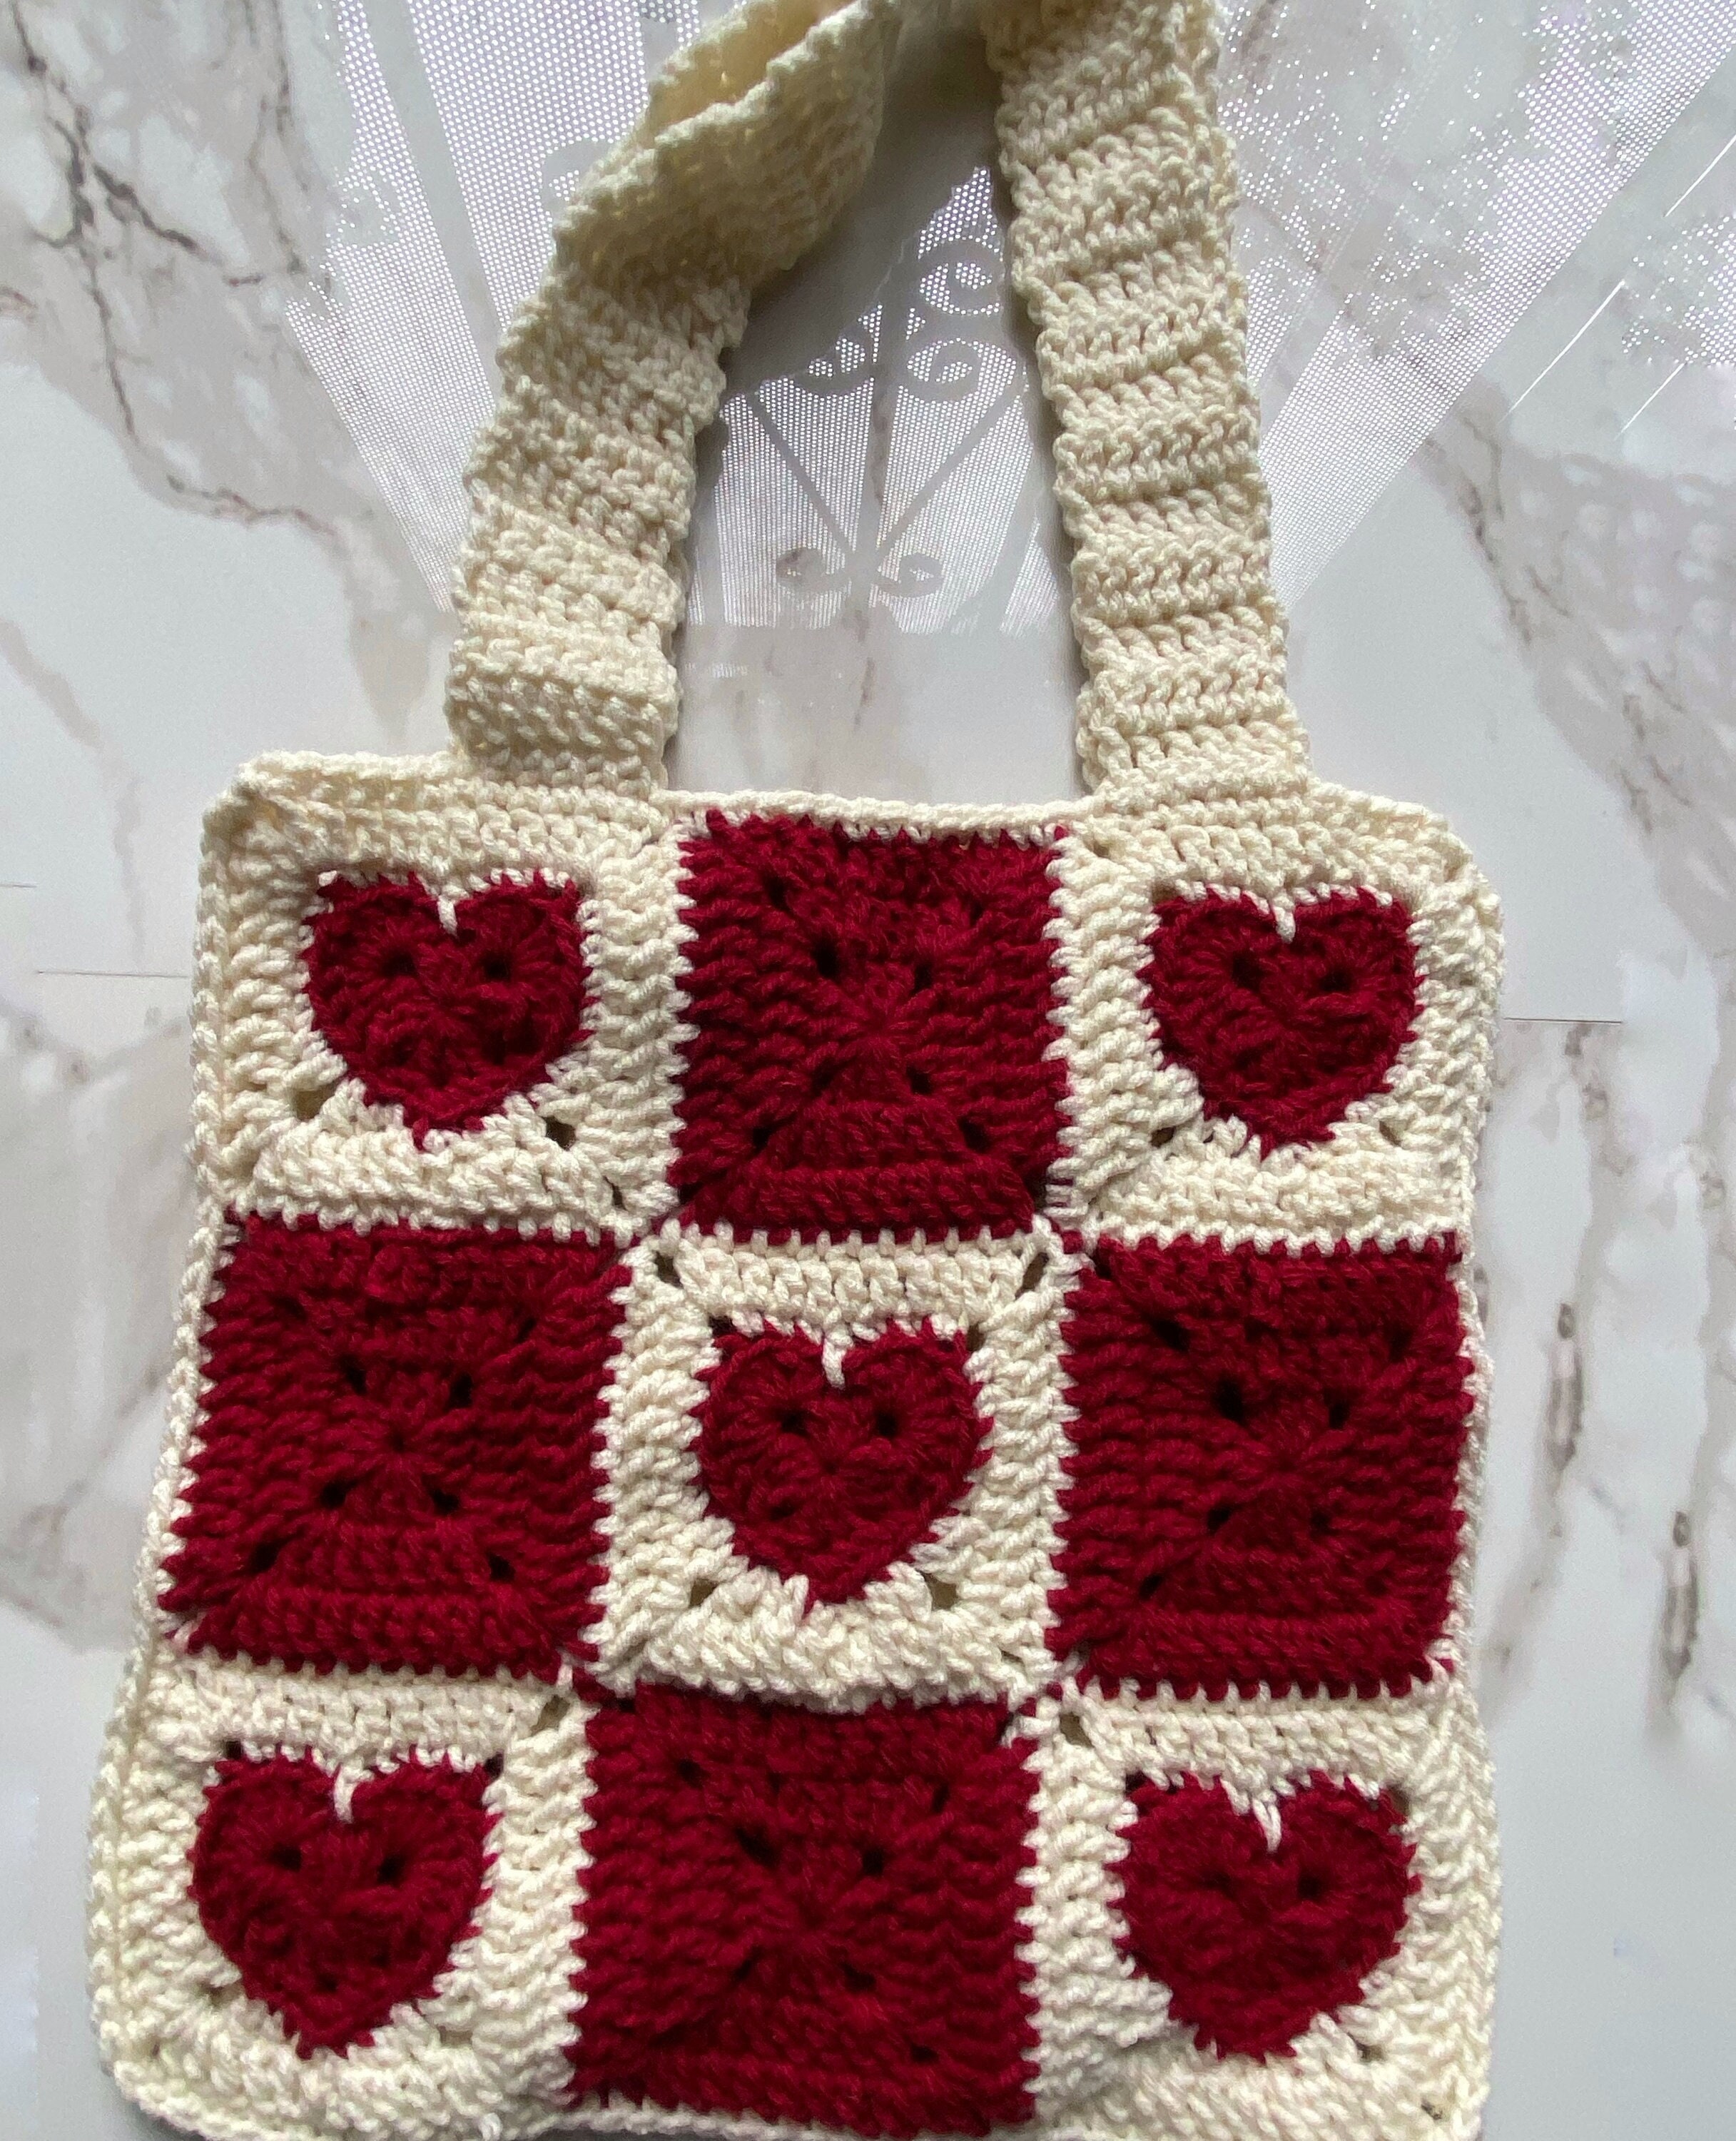 Crochet Heart Granny Square Tote Bag -  Hong Kong